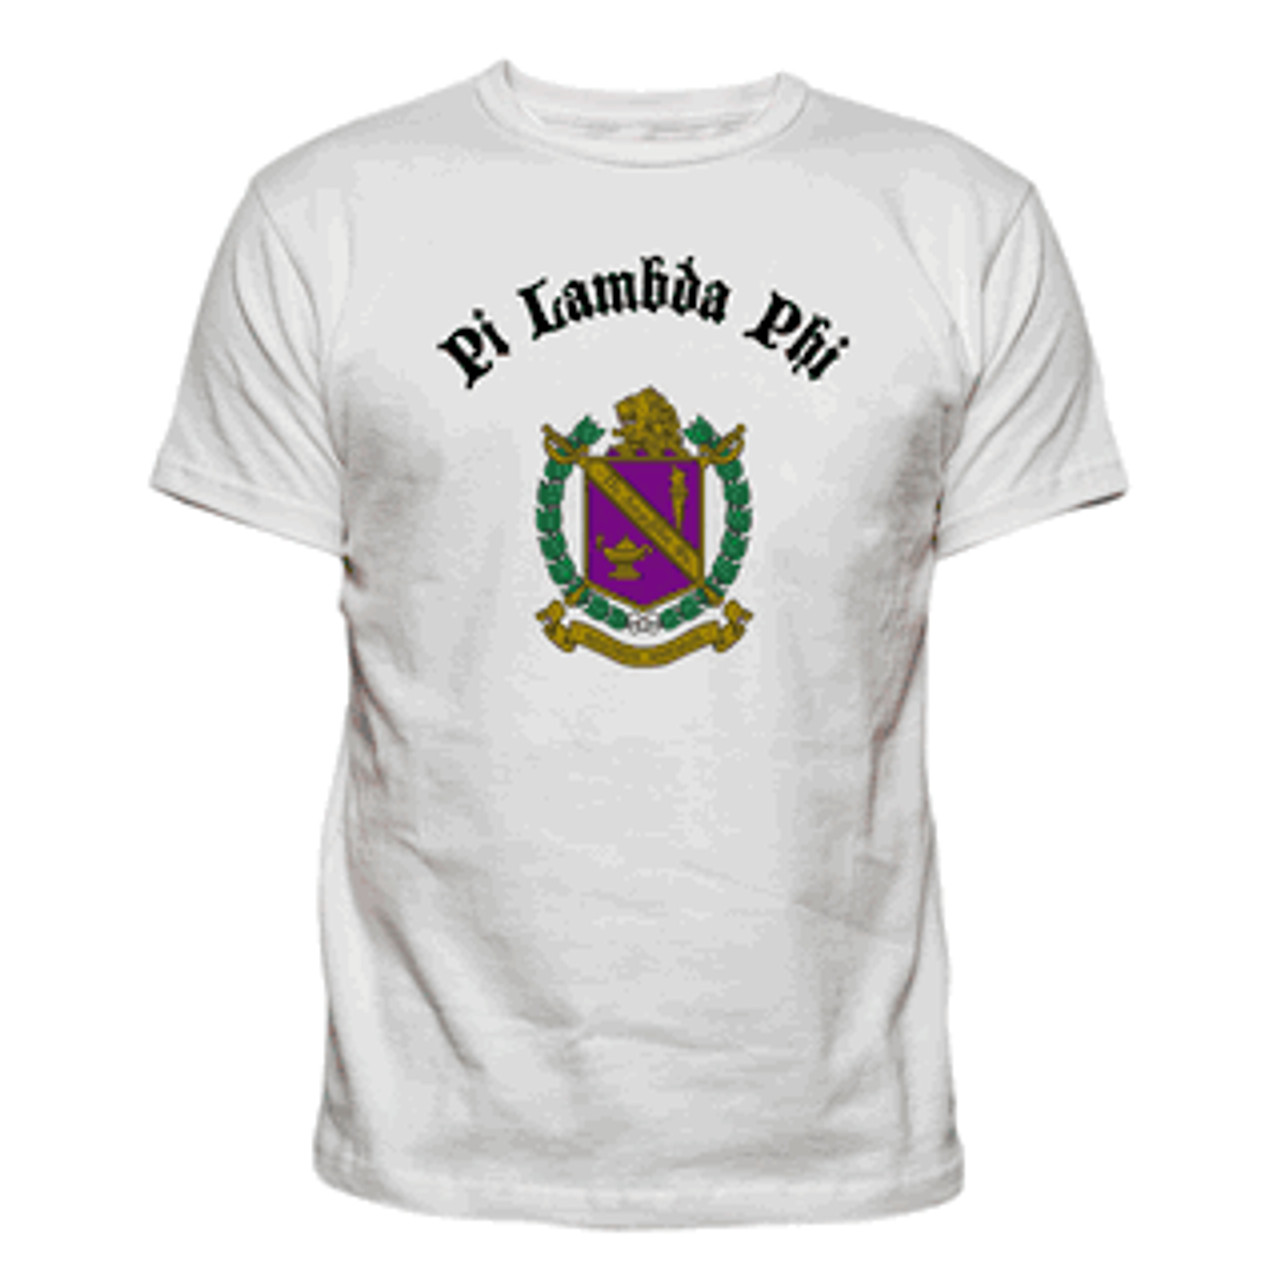 Pi Lambda Phi T-Shirt Designs